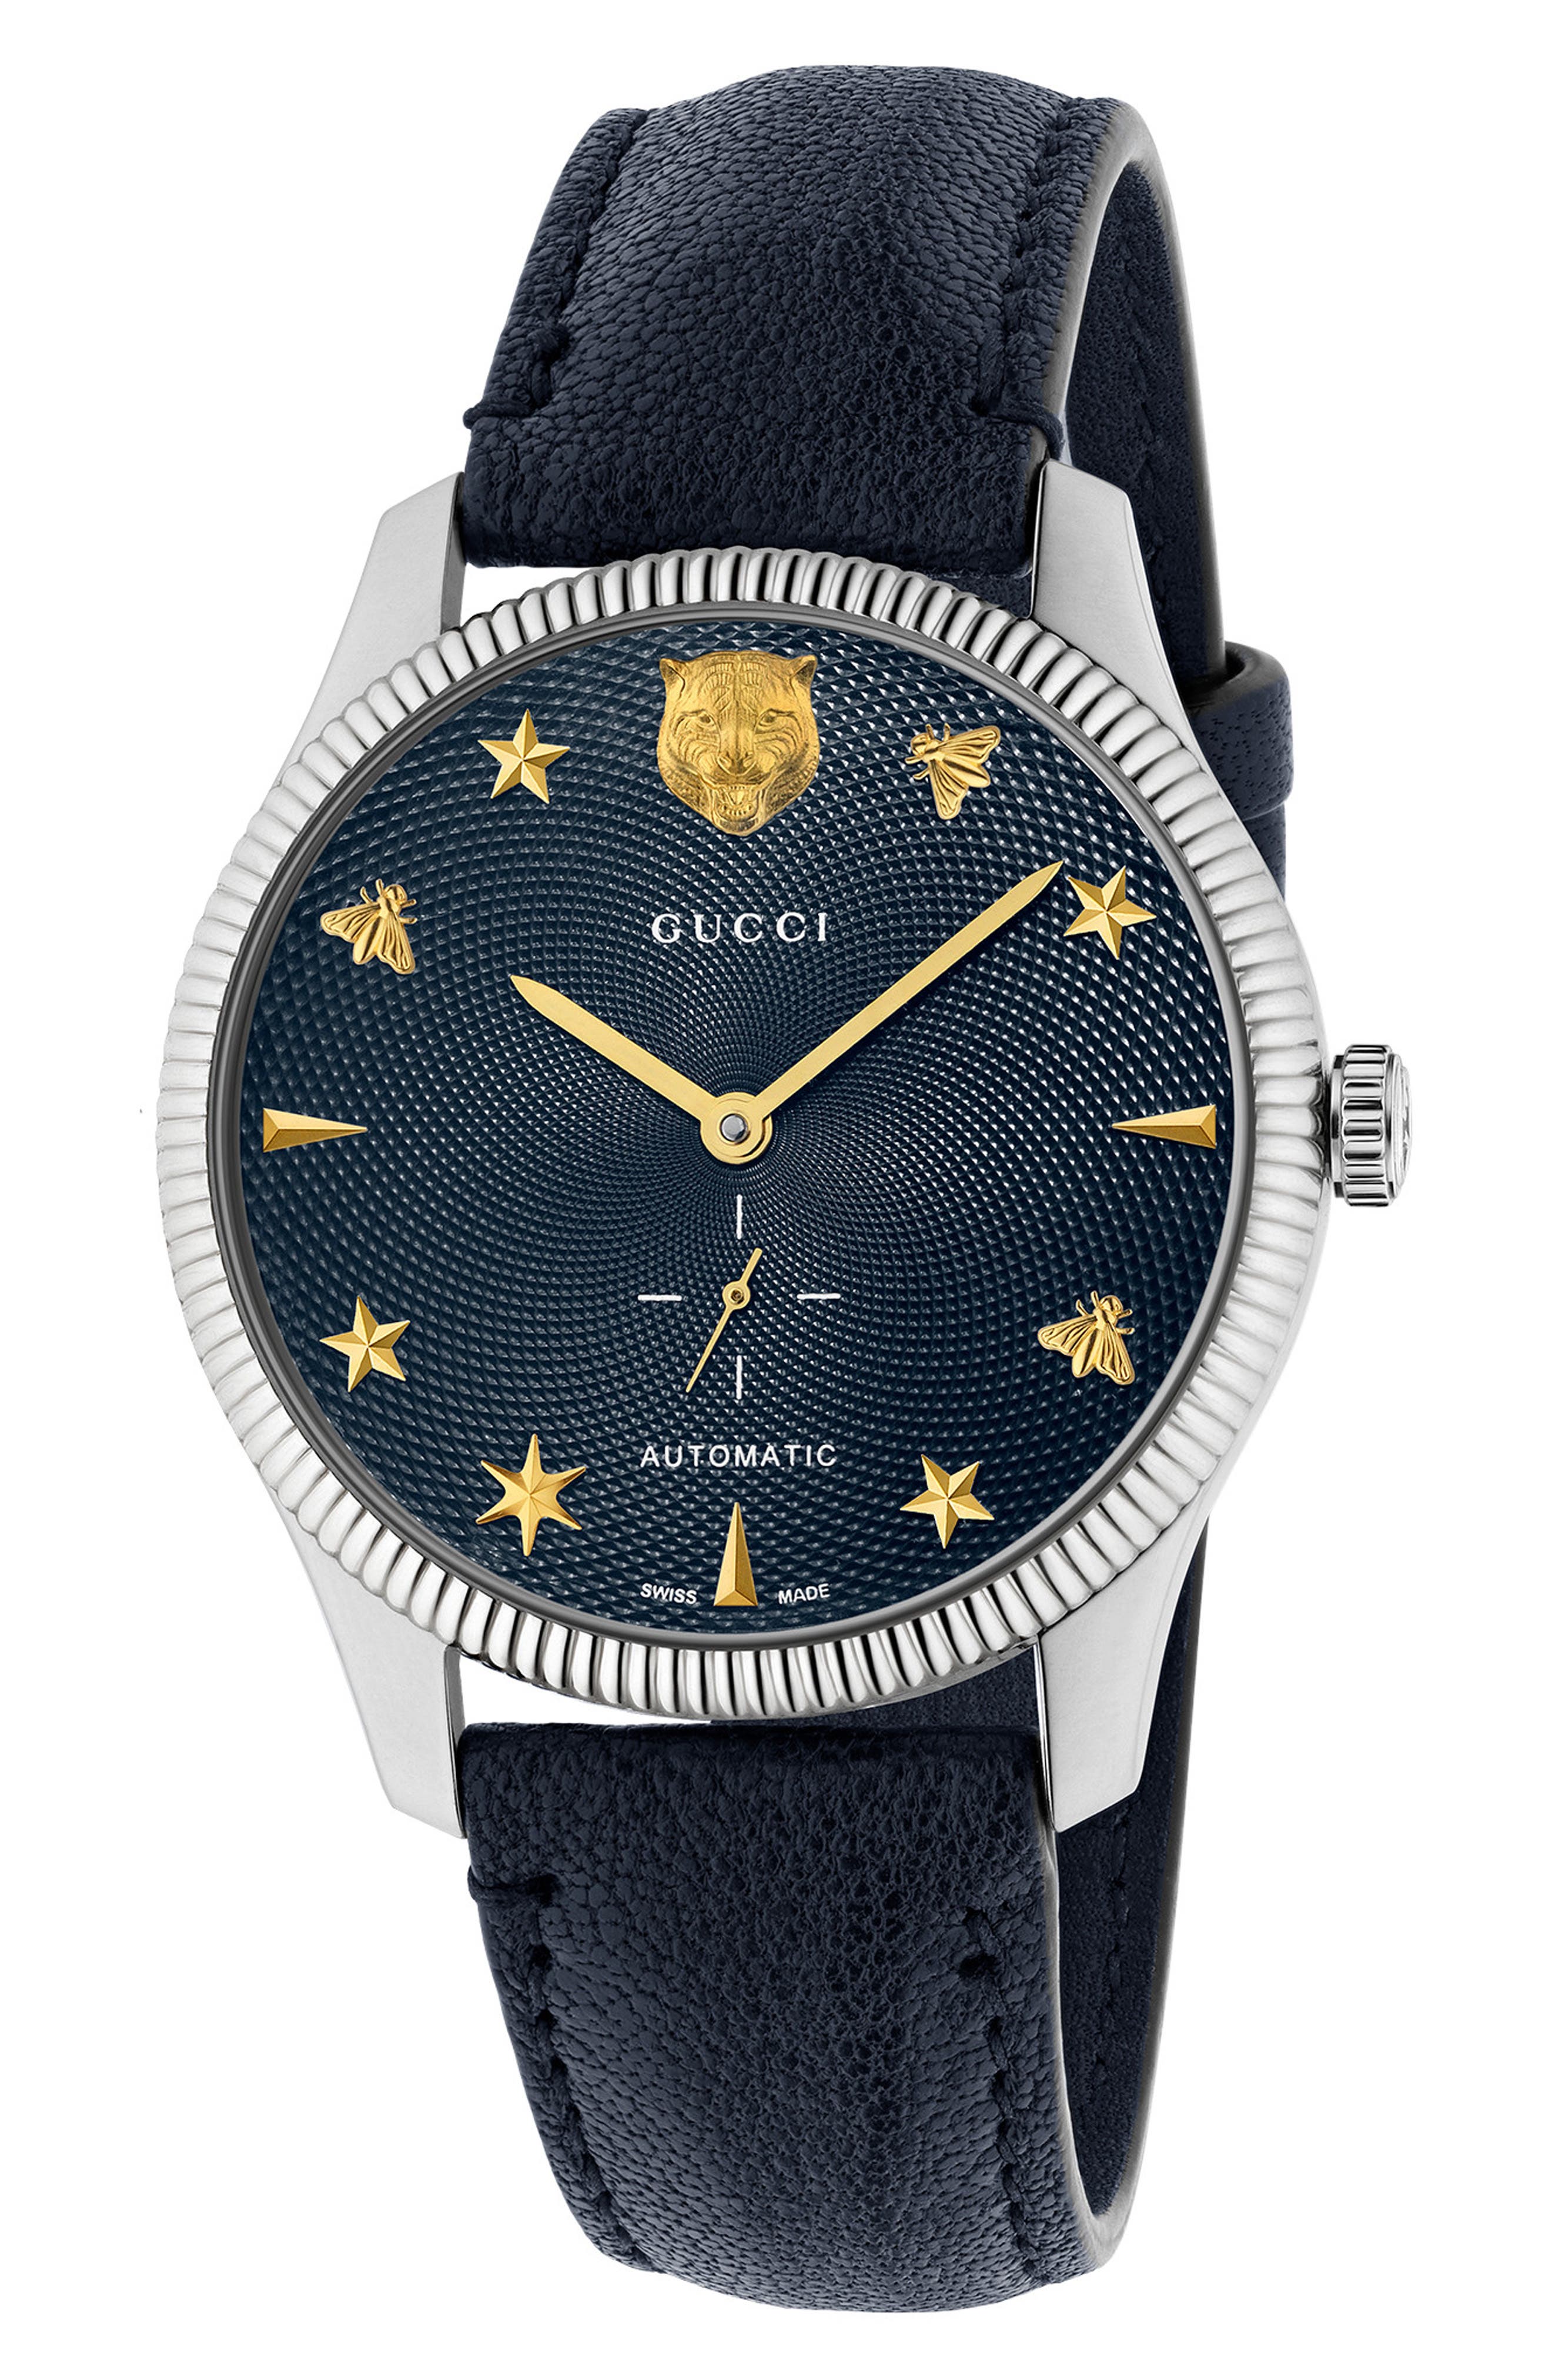 blue gucci watch